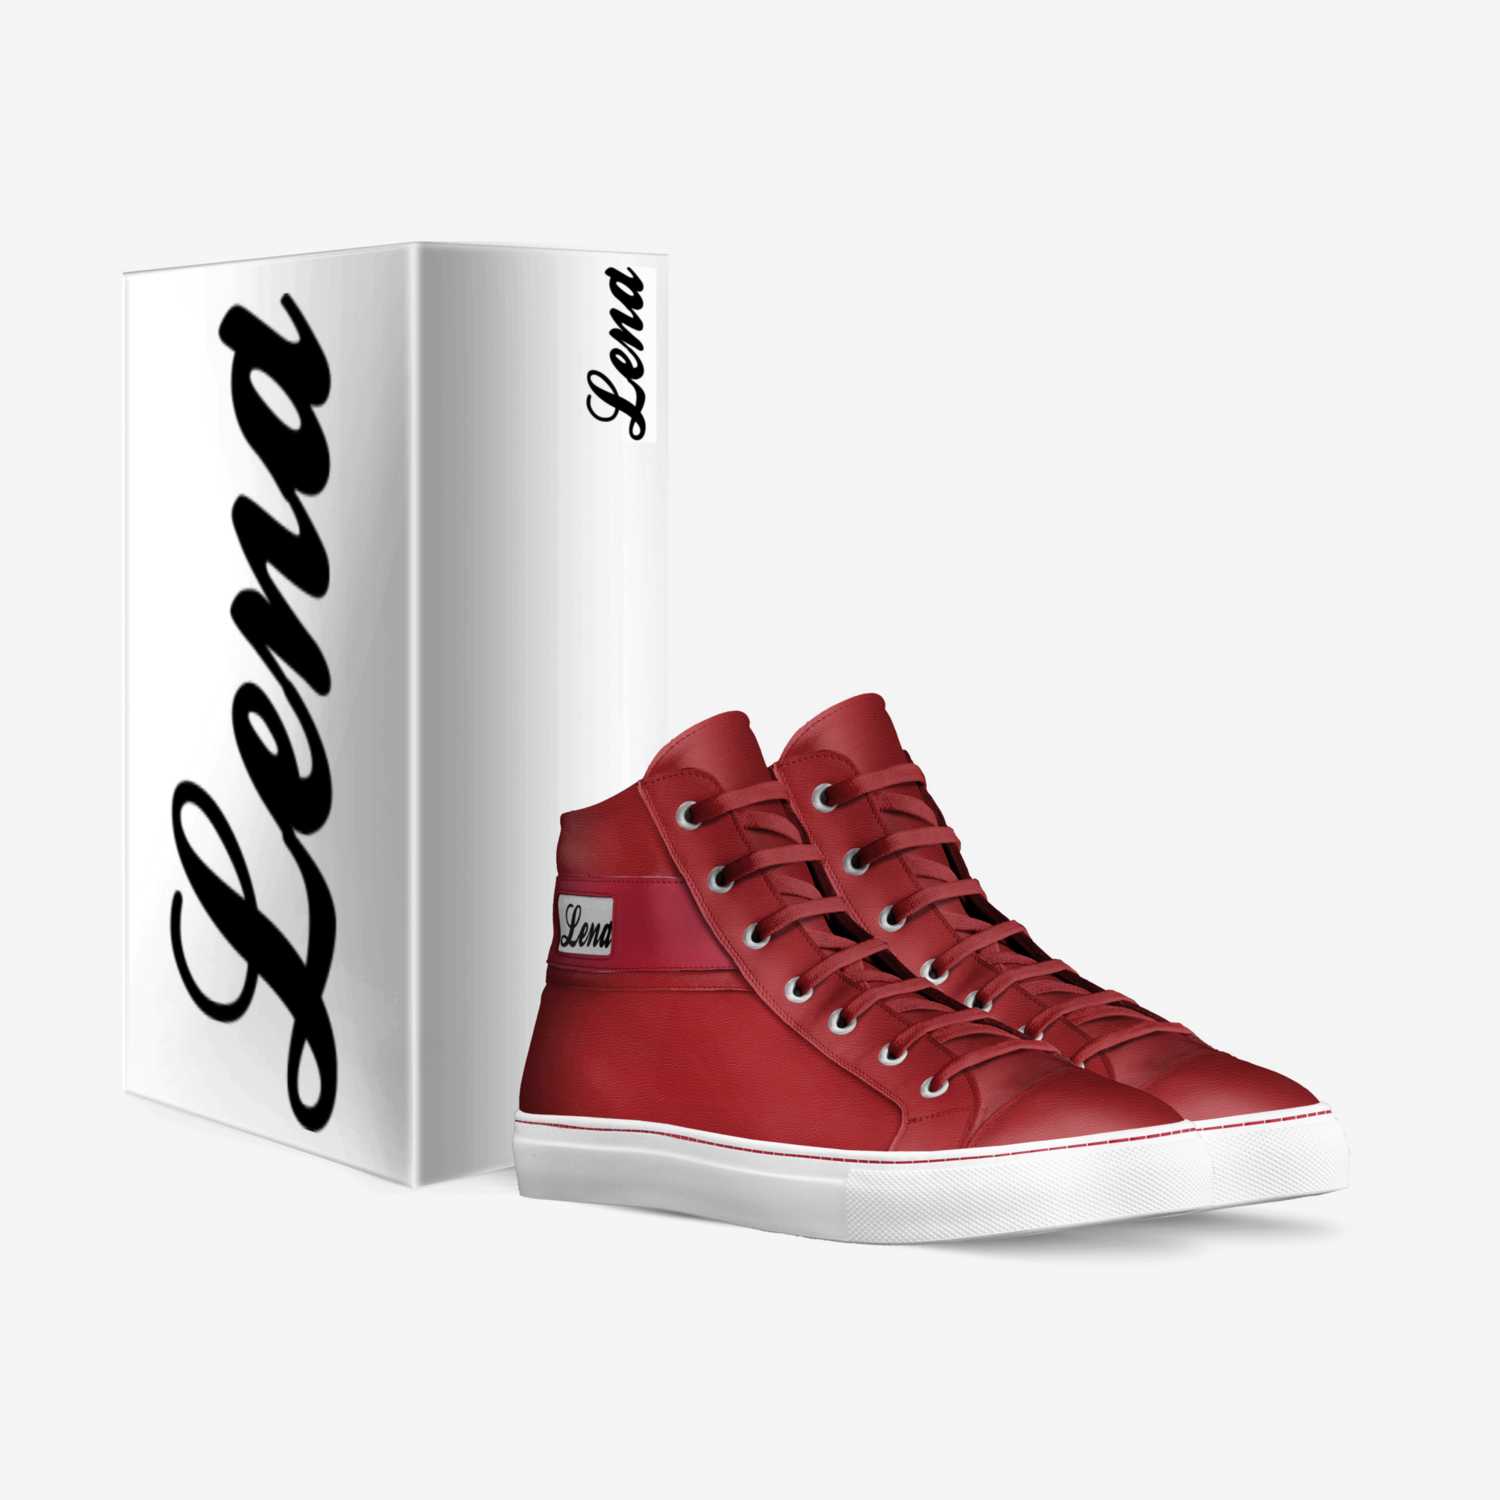 Lena custom made in Italy shoes by David Lena | Box view